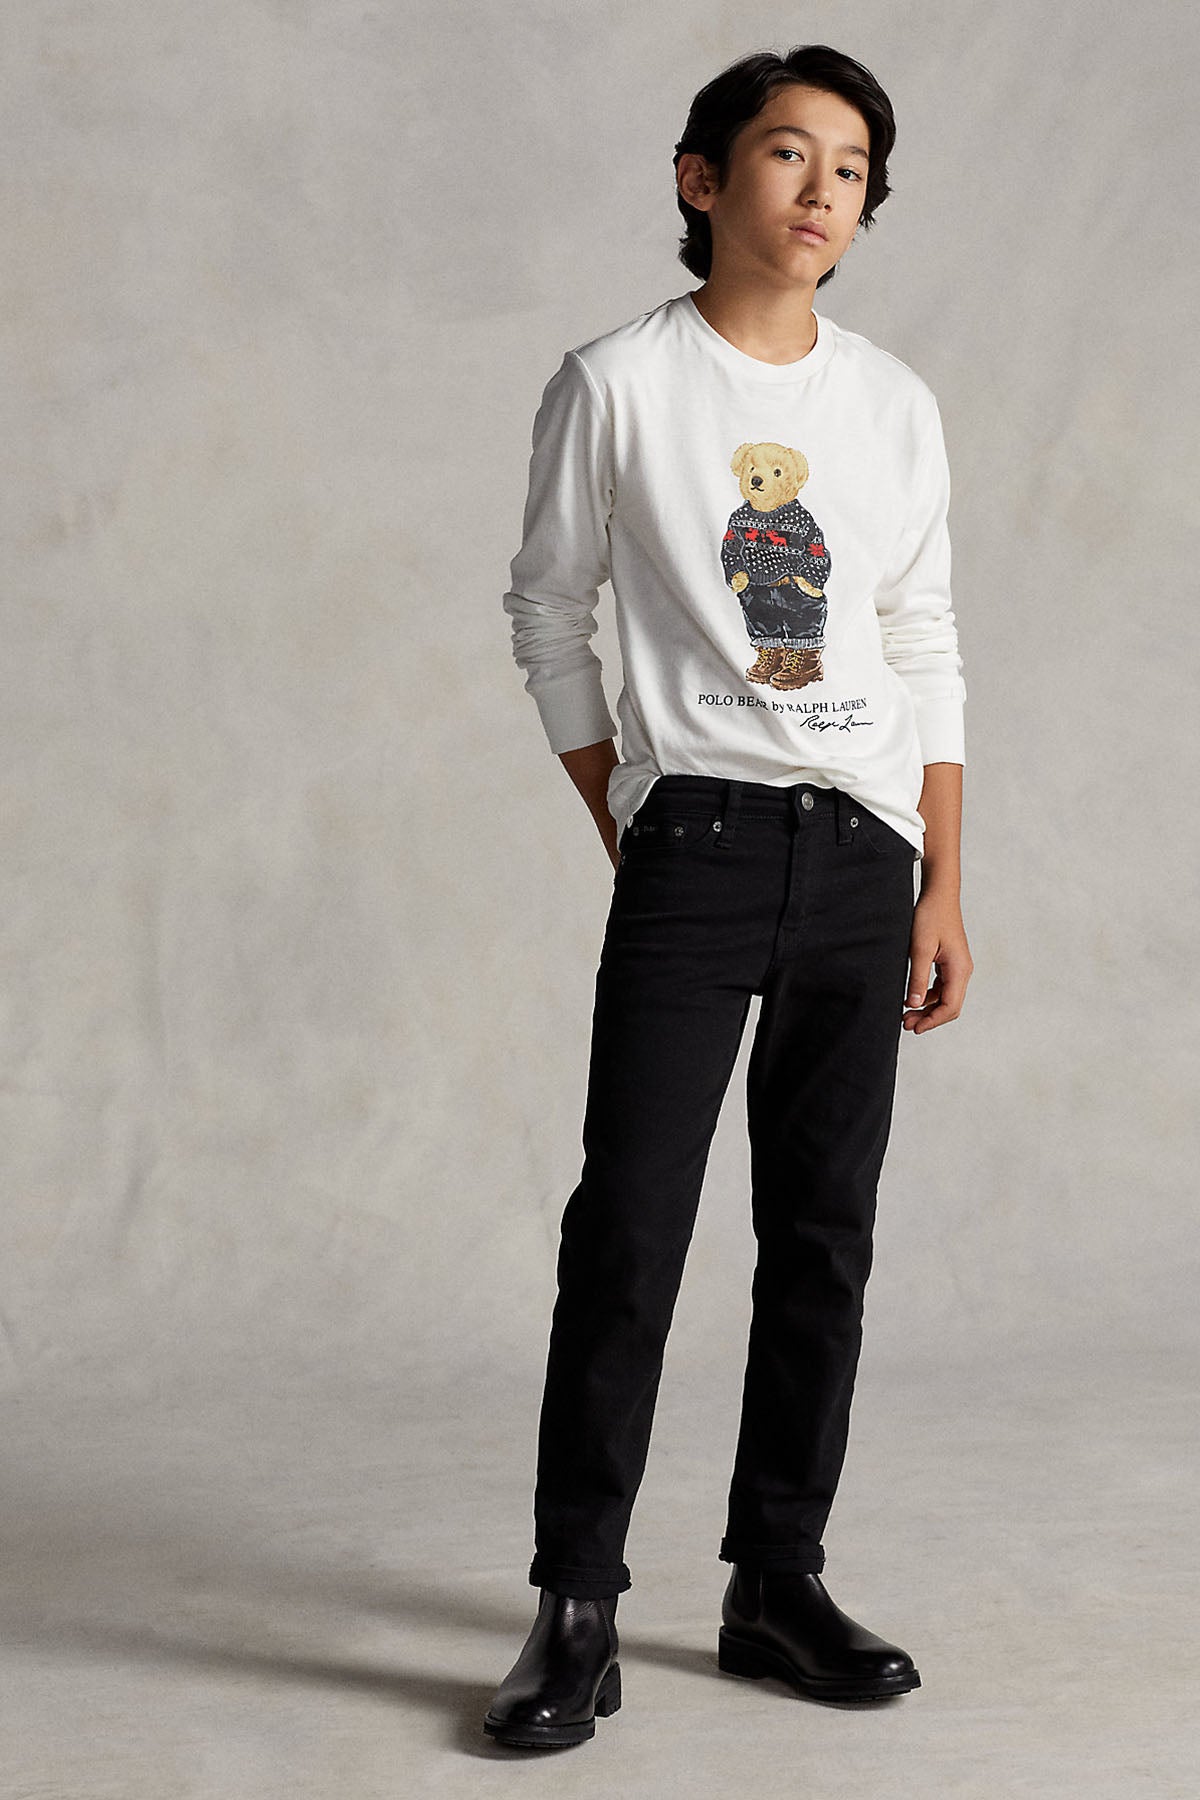 Polo Ralph Lauren Kids S-L Beden Erkek Çocuk Polo Bear Uzun Kollu T-shirt-Libas Trendy Fashion Store